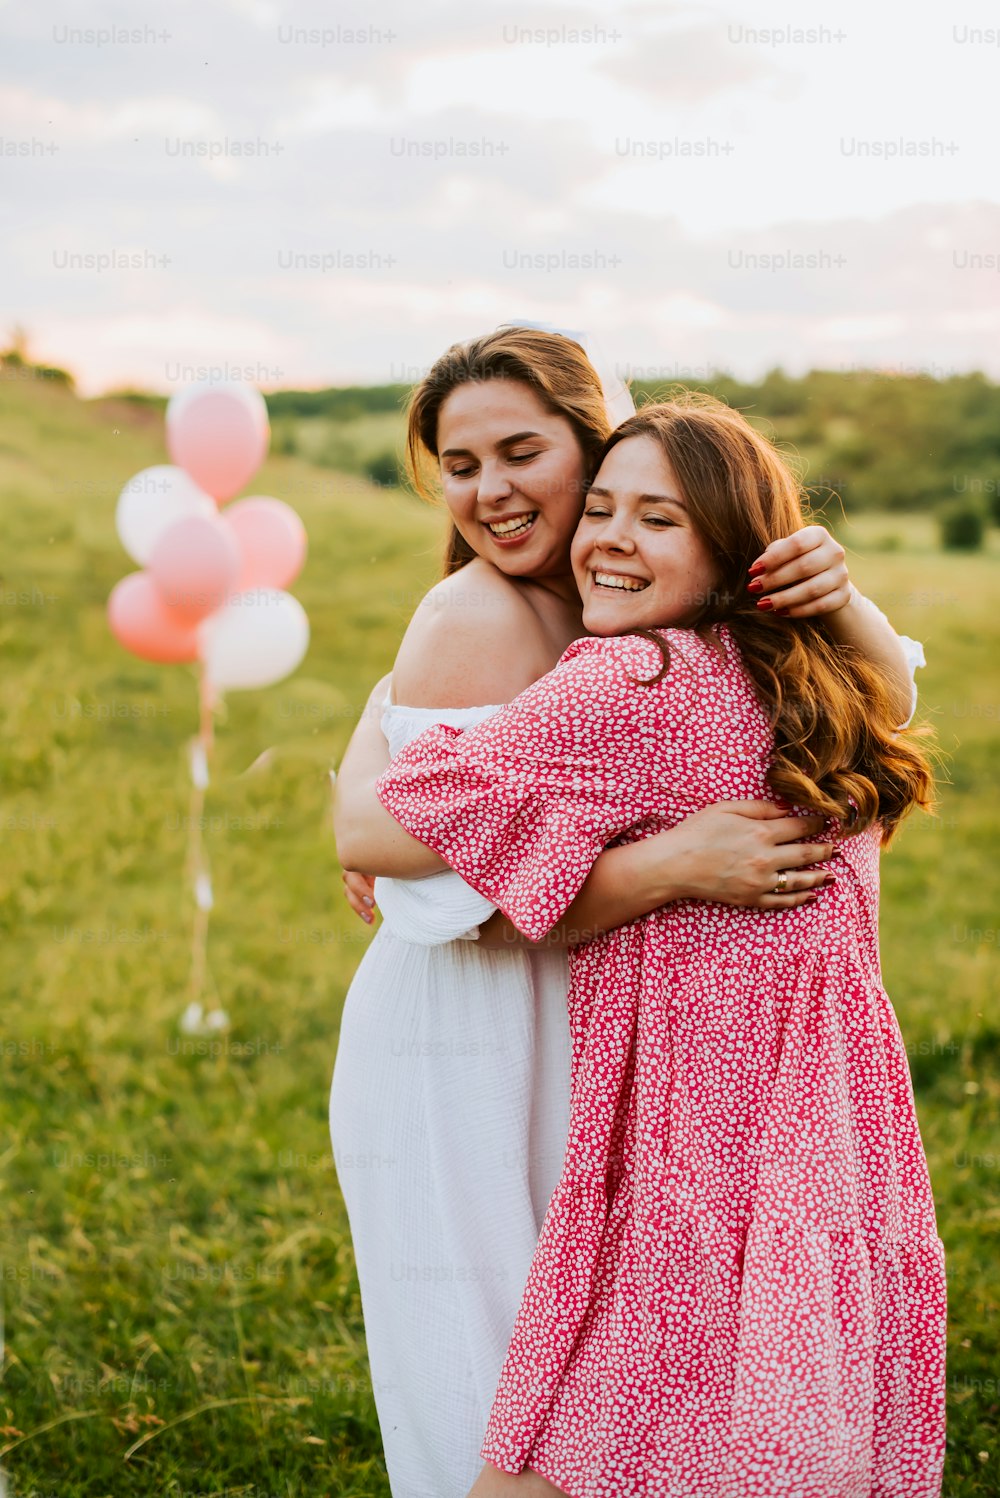 two women hugging each other in a field